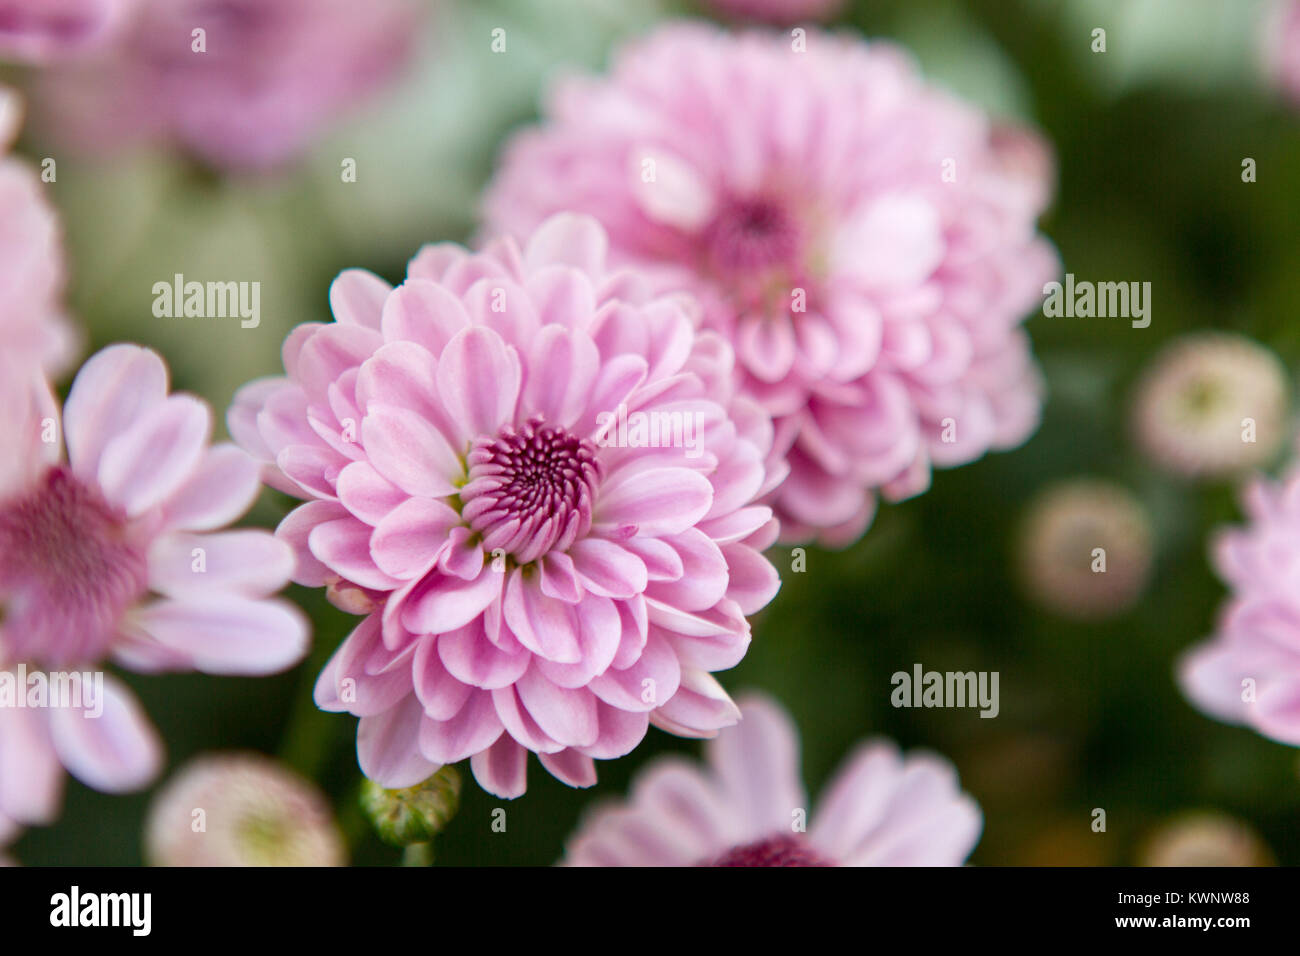 Pink chrysanthemum flowers blooming in the garden Stock Photo